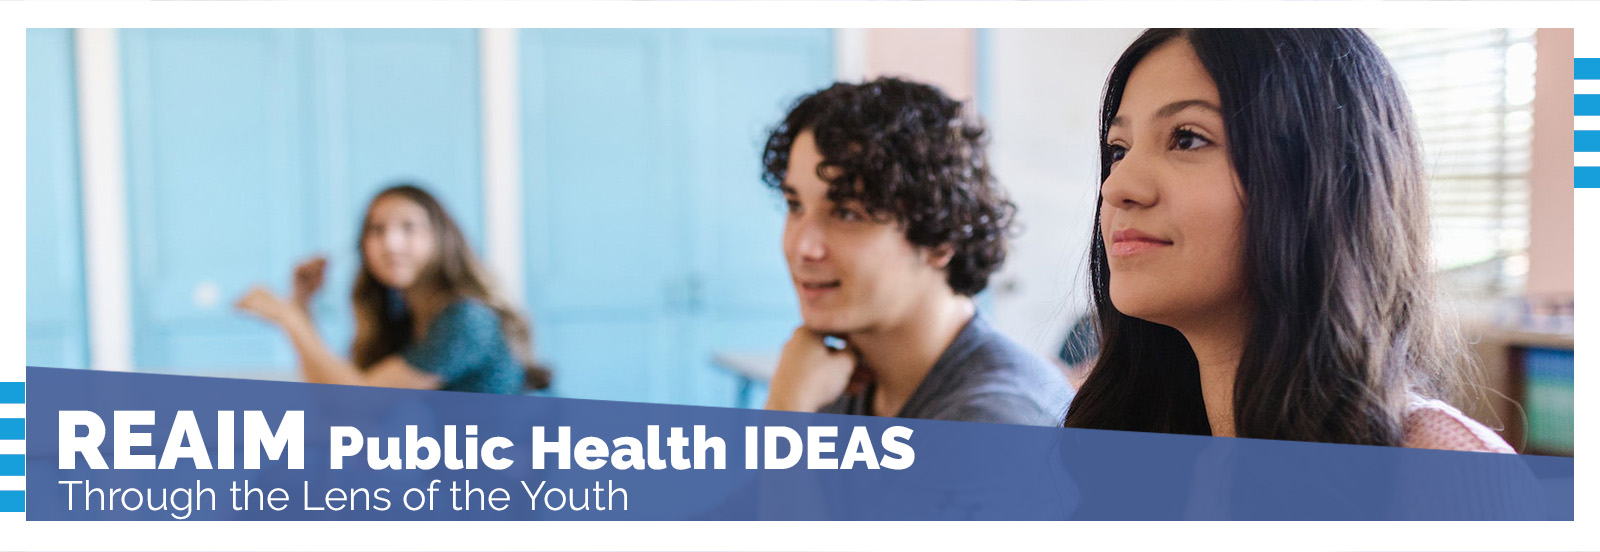 REAIM Public Health IDEAS through the Lens of the Youth